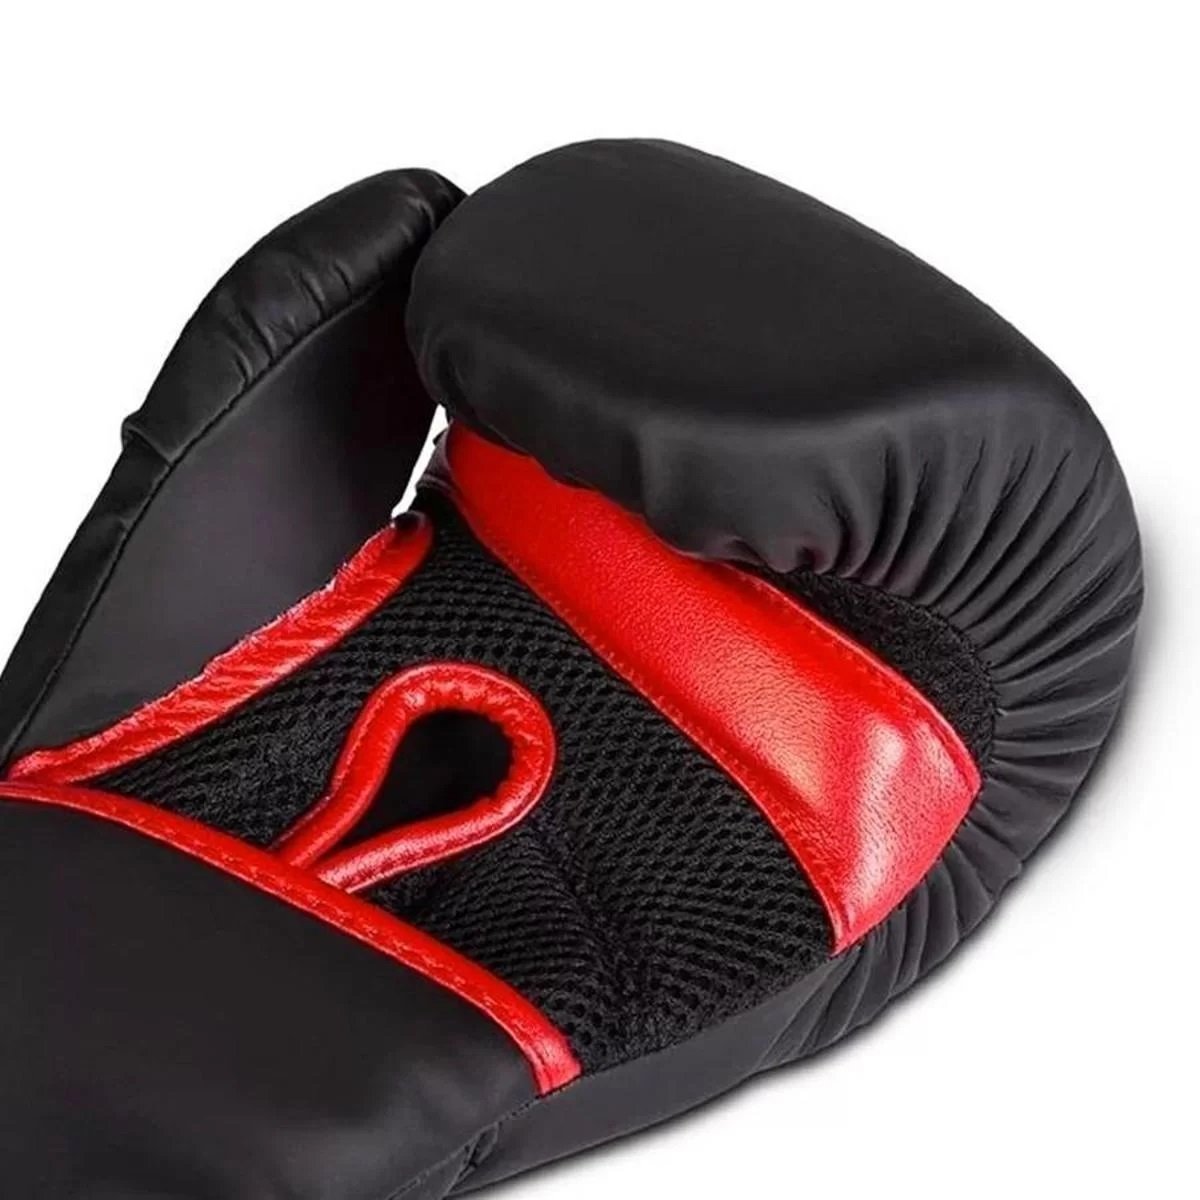 Kit Luva de Boxe Muay Thai - Naja Black Preto/vermelho + Bandagem+bucal:16/preto/vermelho - 4